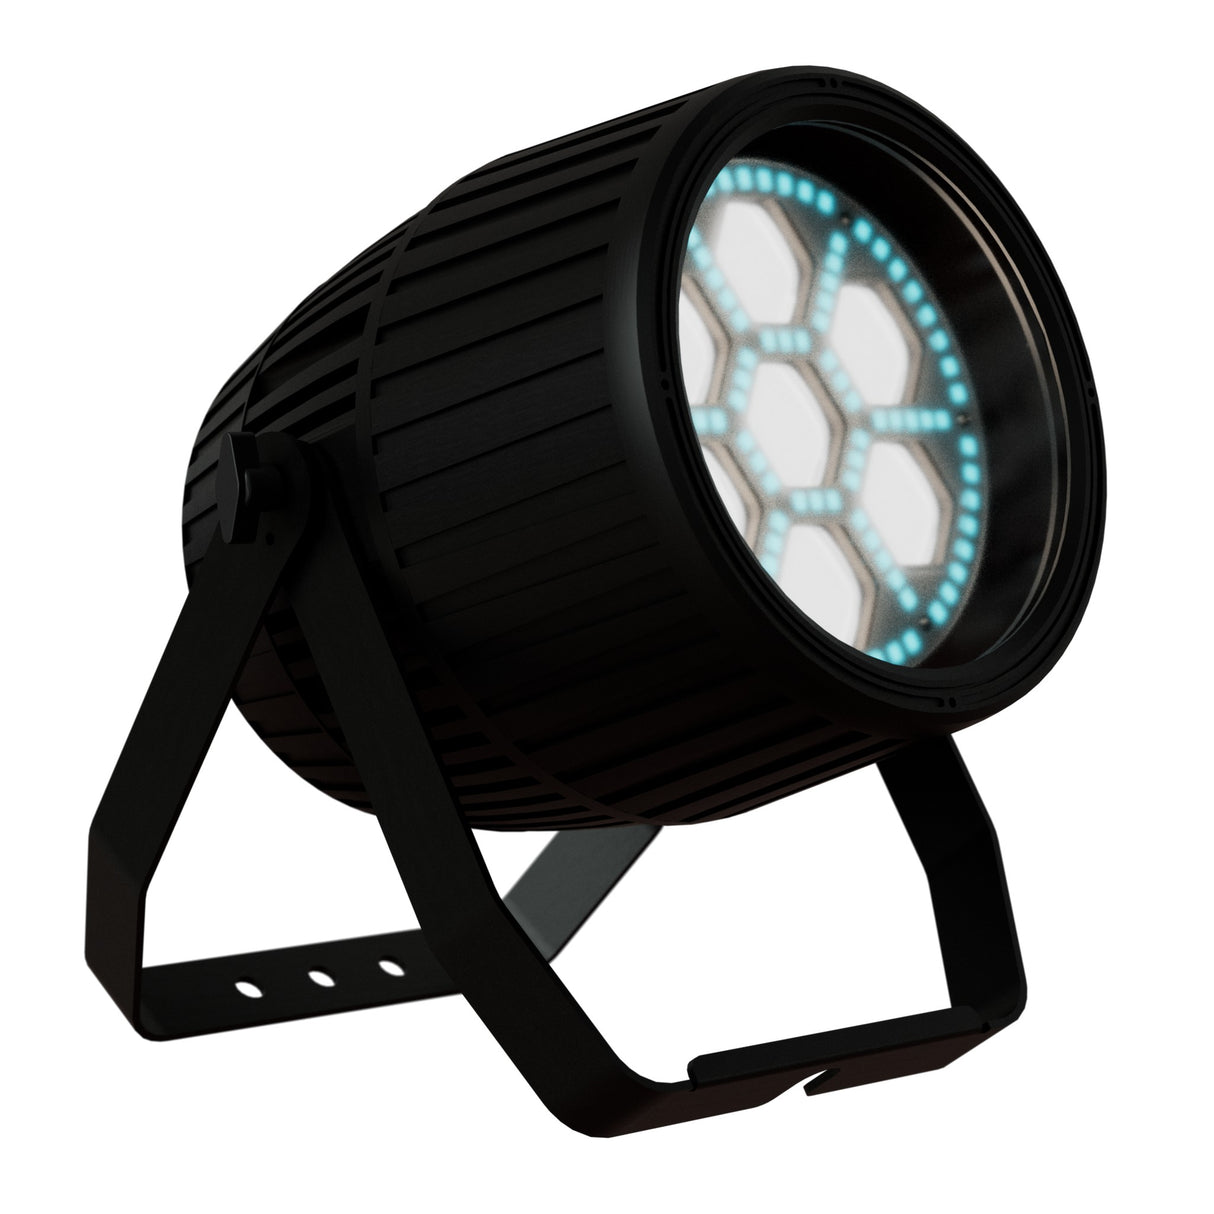 Blizzard Lighting Motif Settelenti 7x 40W 4-In-1 RGBW IP65-Rated LED Wash Fixture, Black